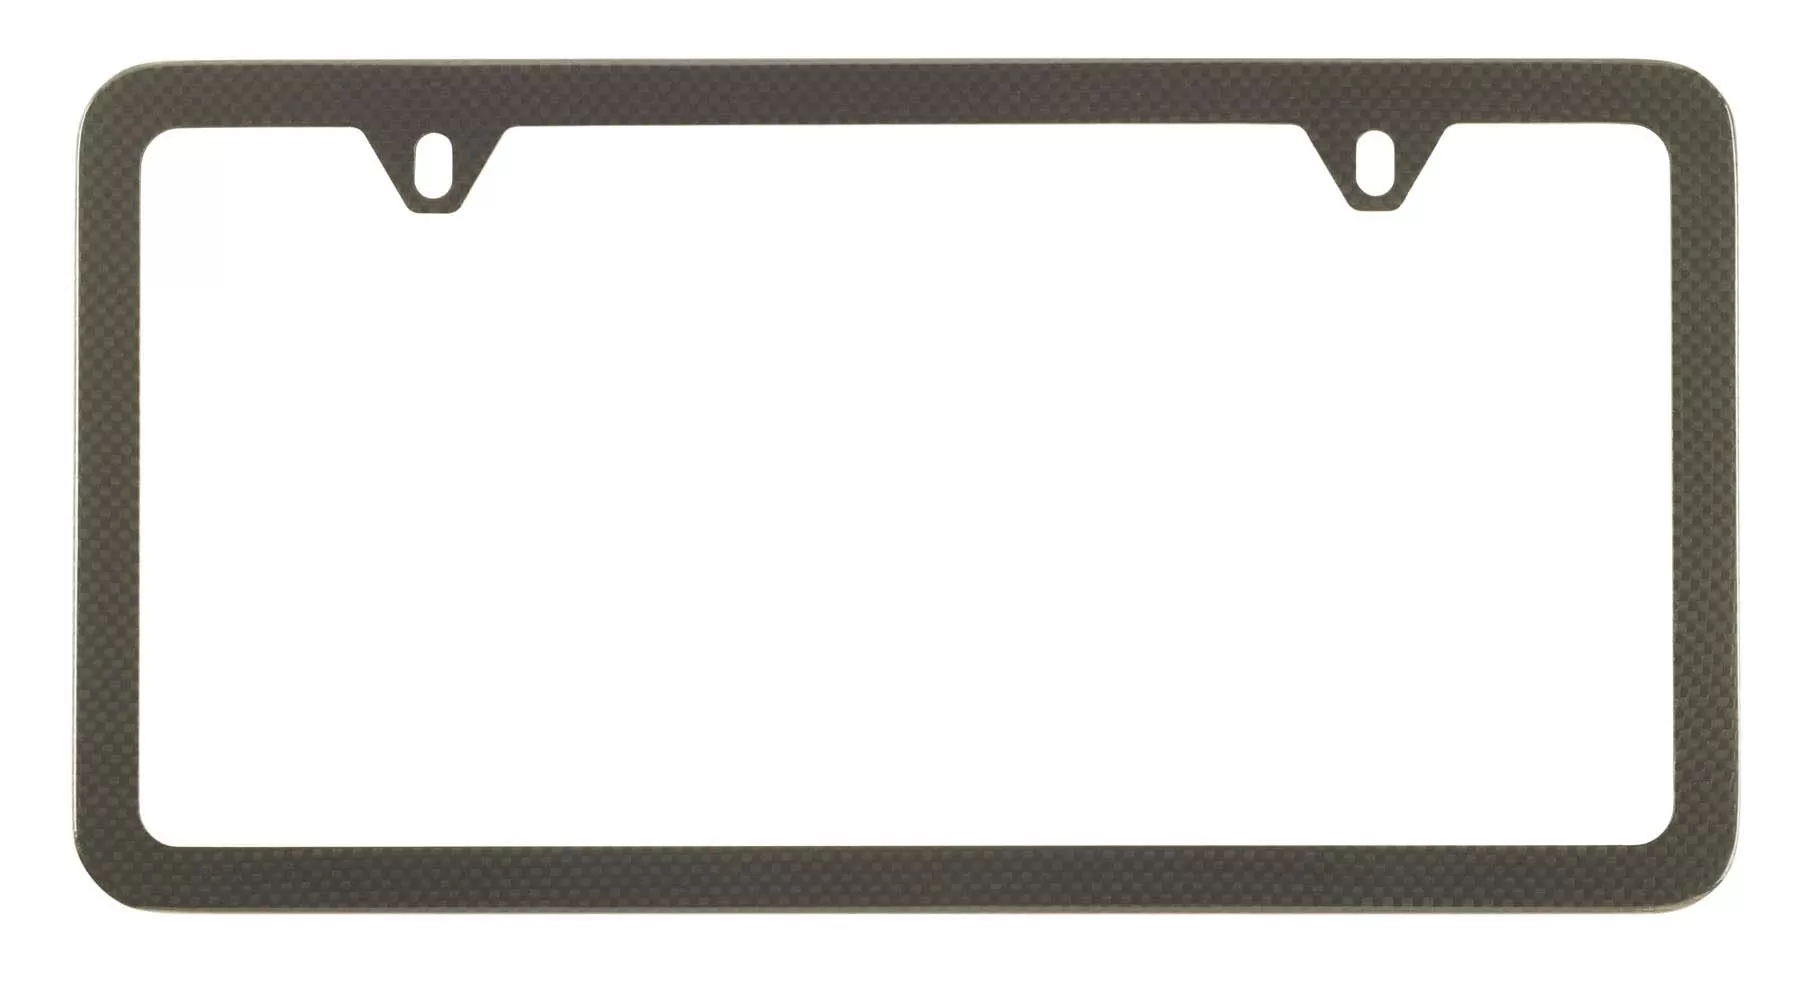 Genuine Subaru License Plate Frame - Carbon Fiber (STi) - SOA342L142